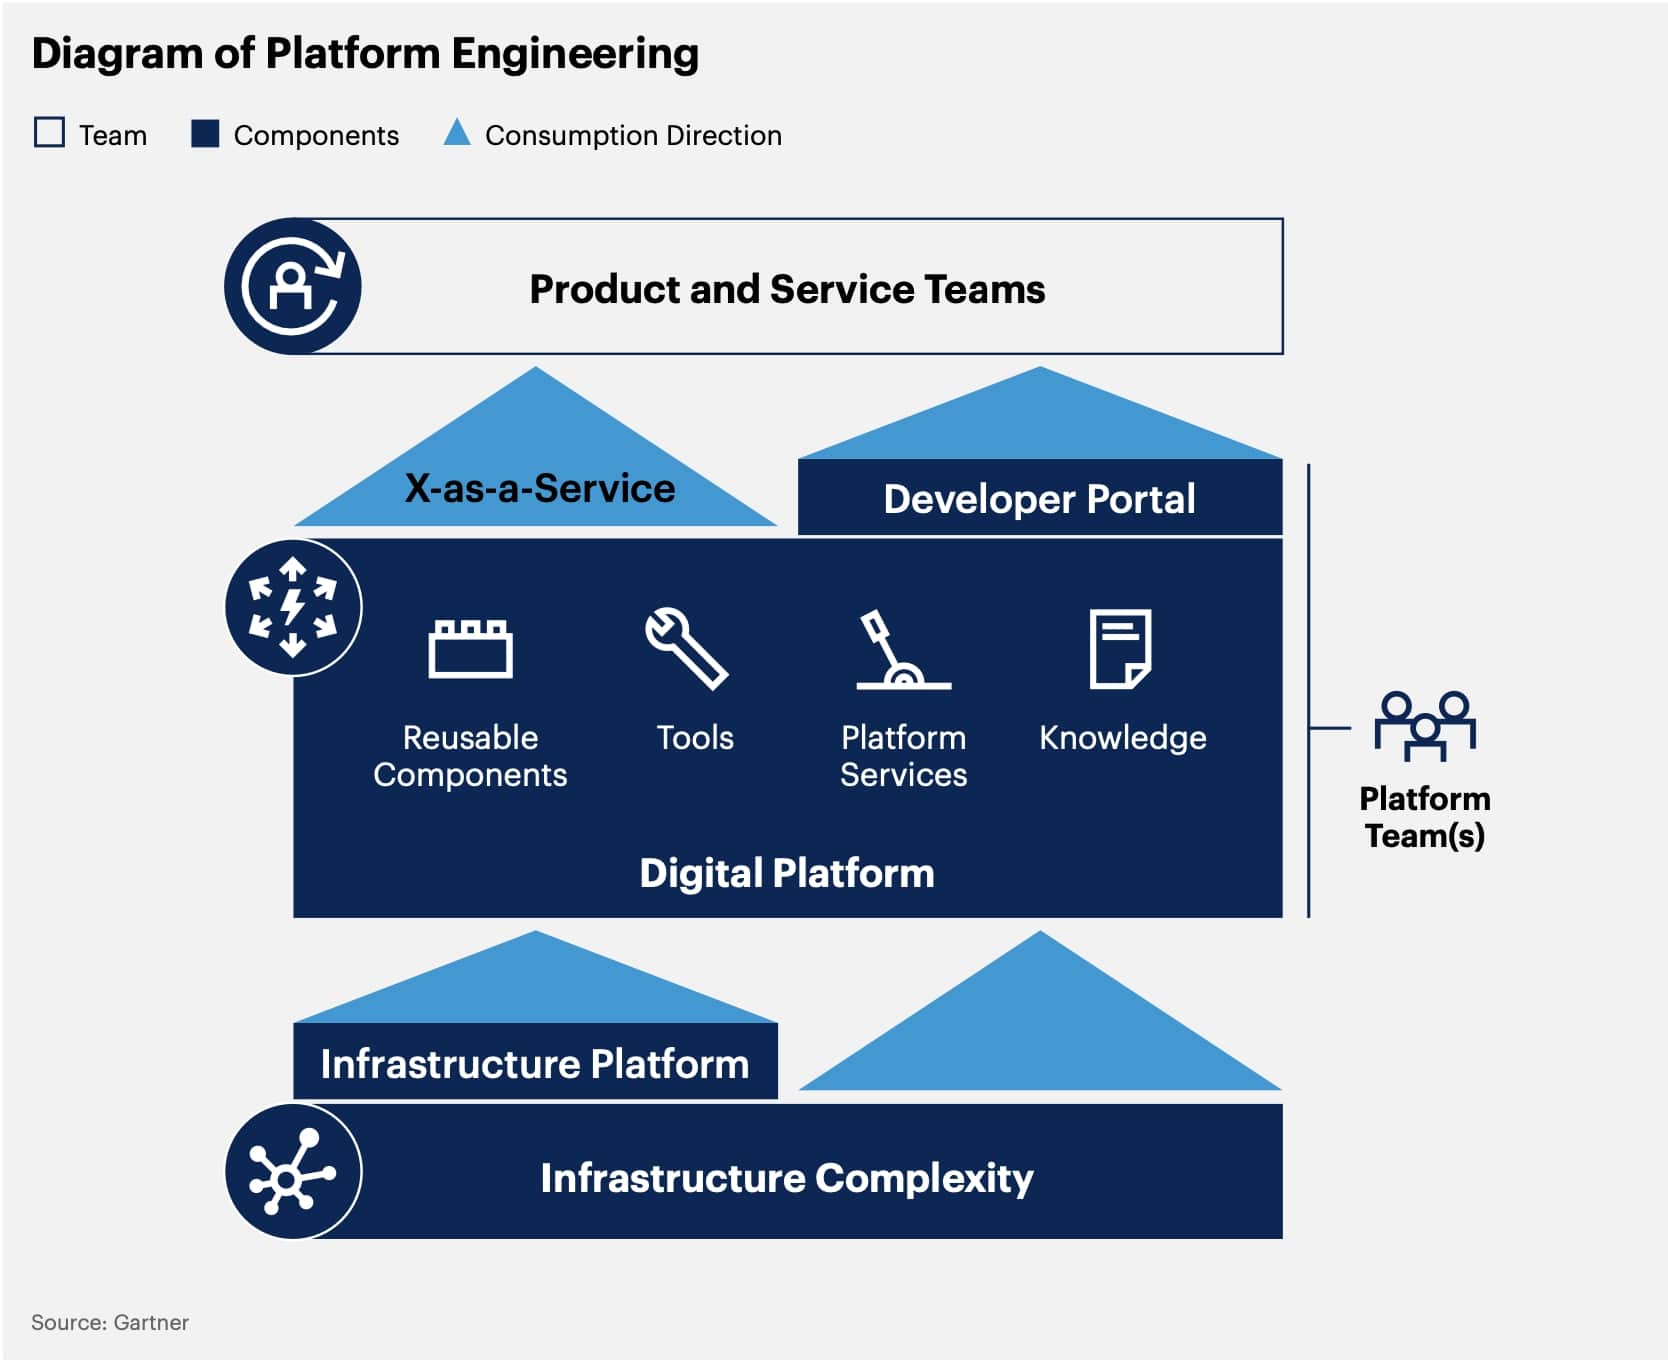 Diagram of Platform Engineering - Source:Gartner